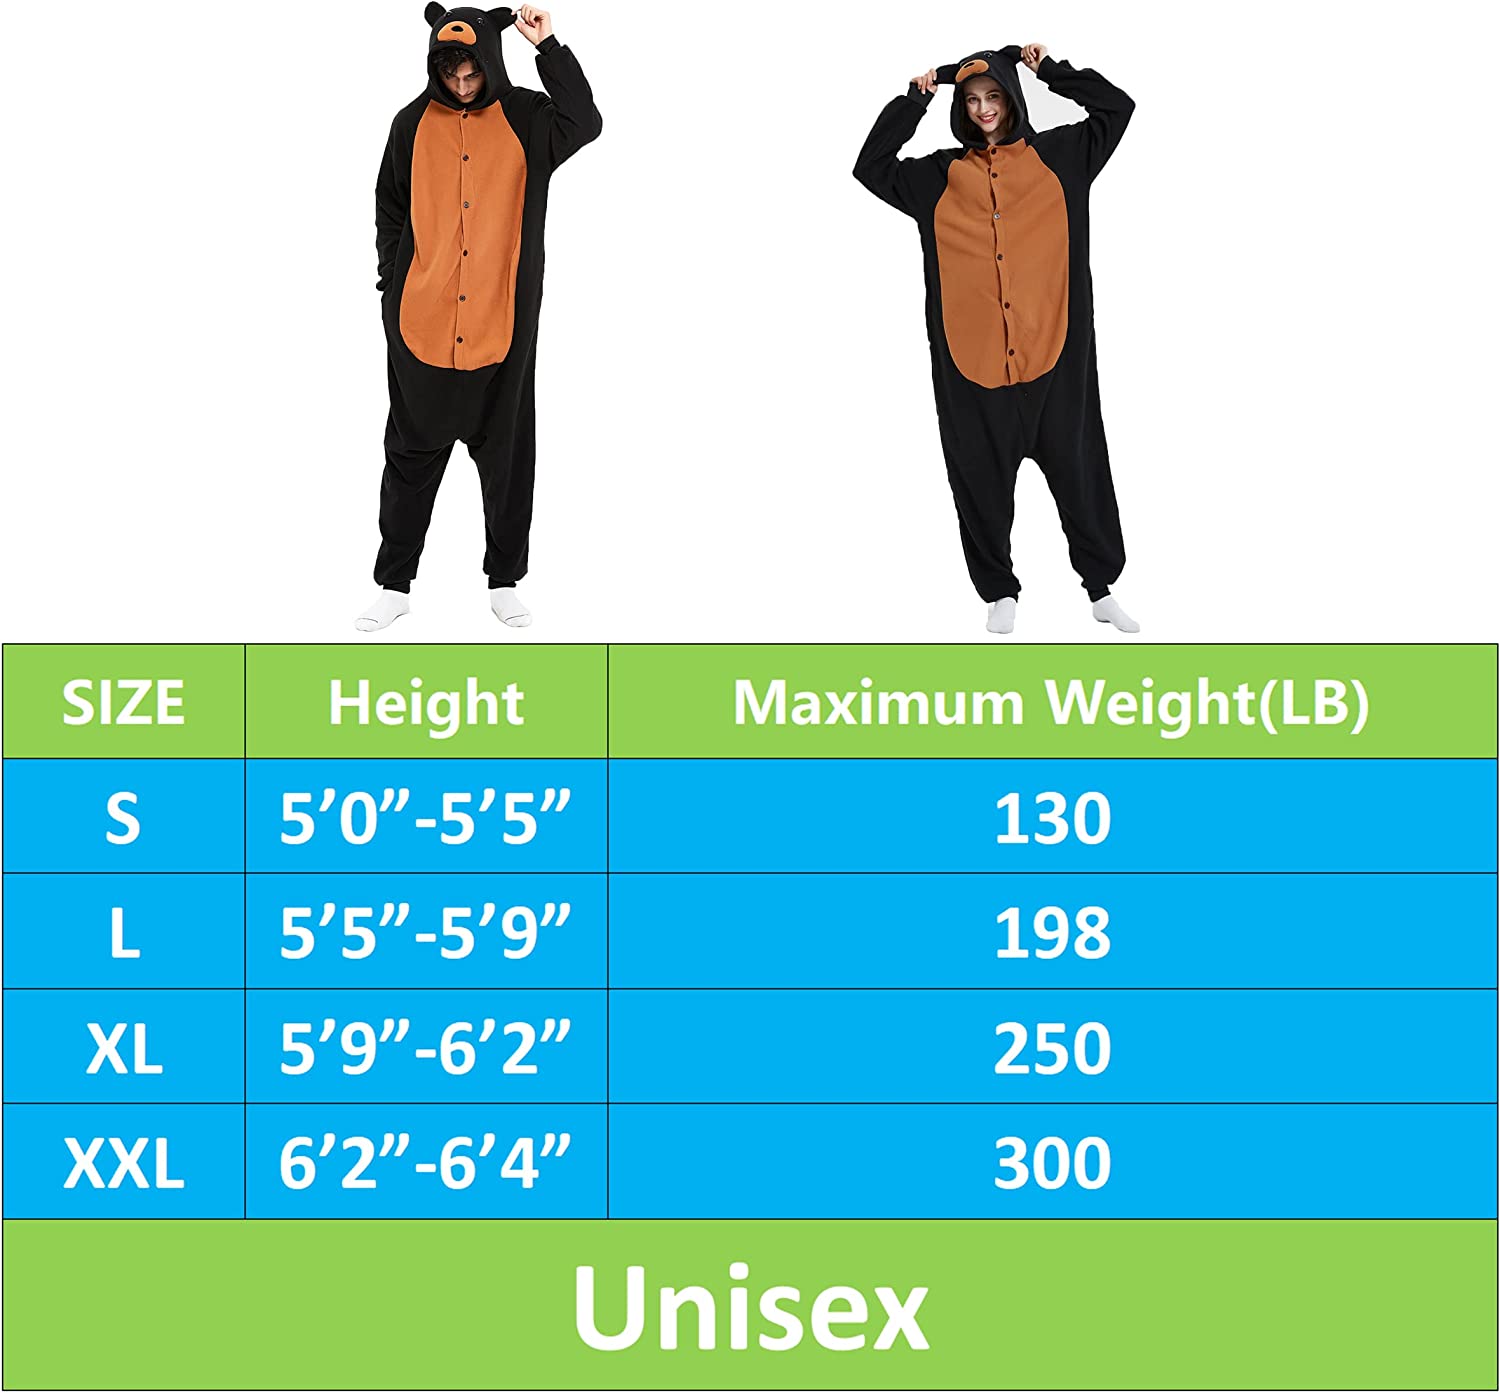 Black Bear Onesie Animal Women/Men Adult Costume Pajamas for Teen